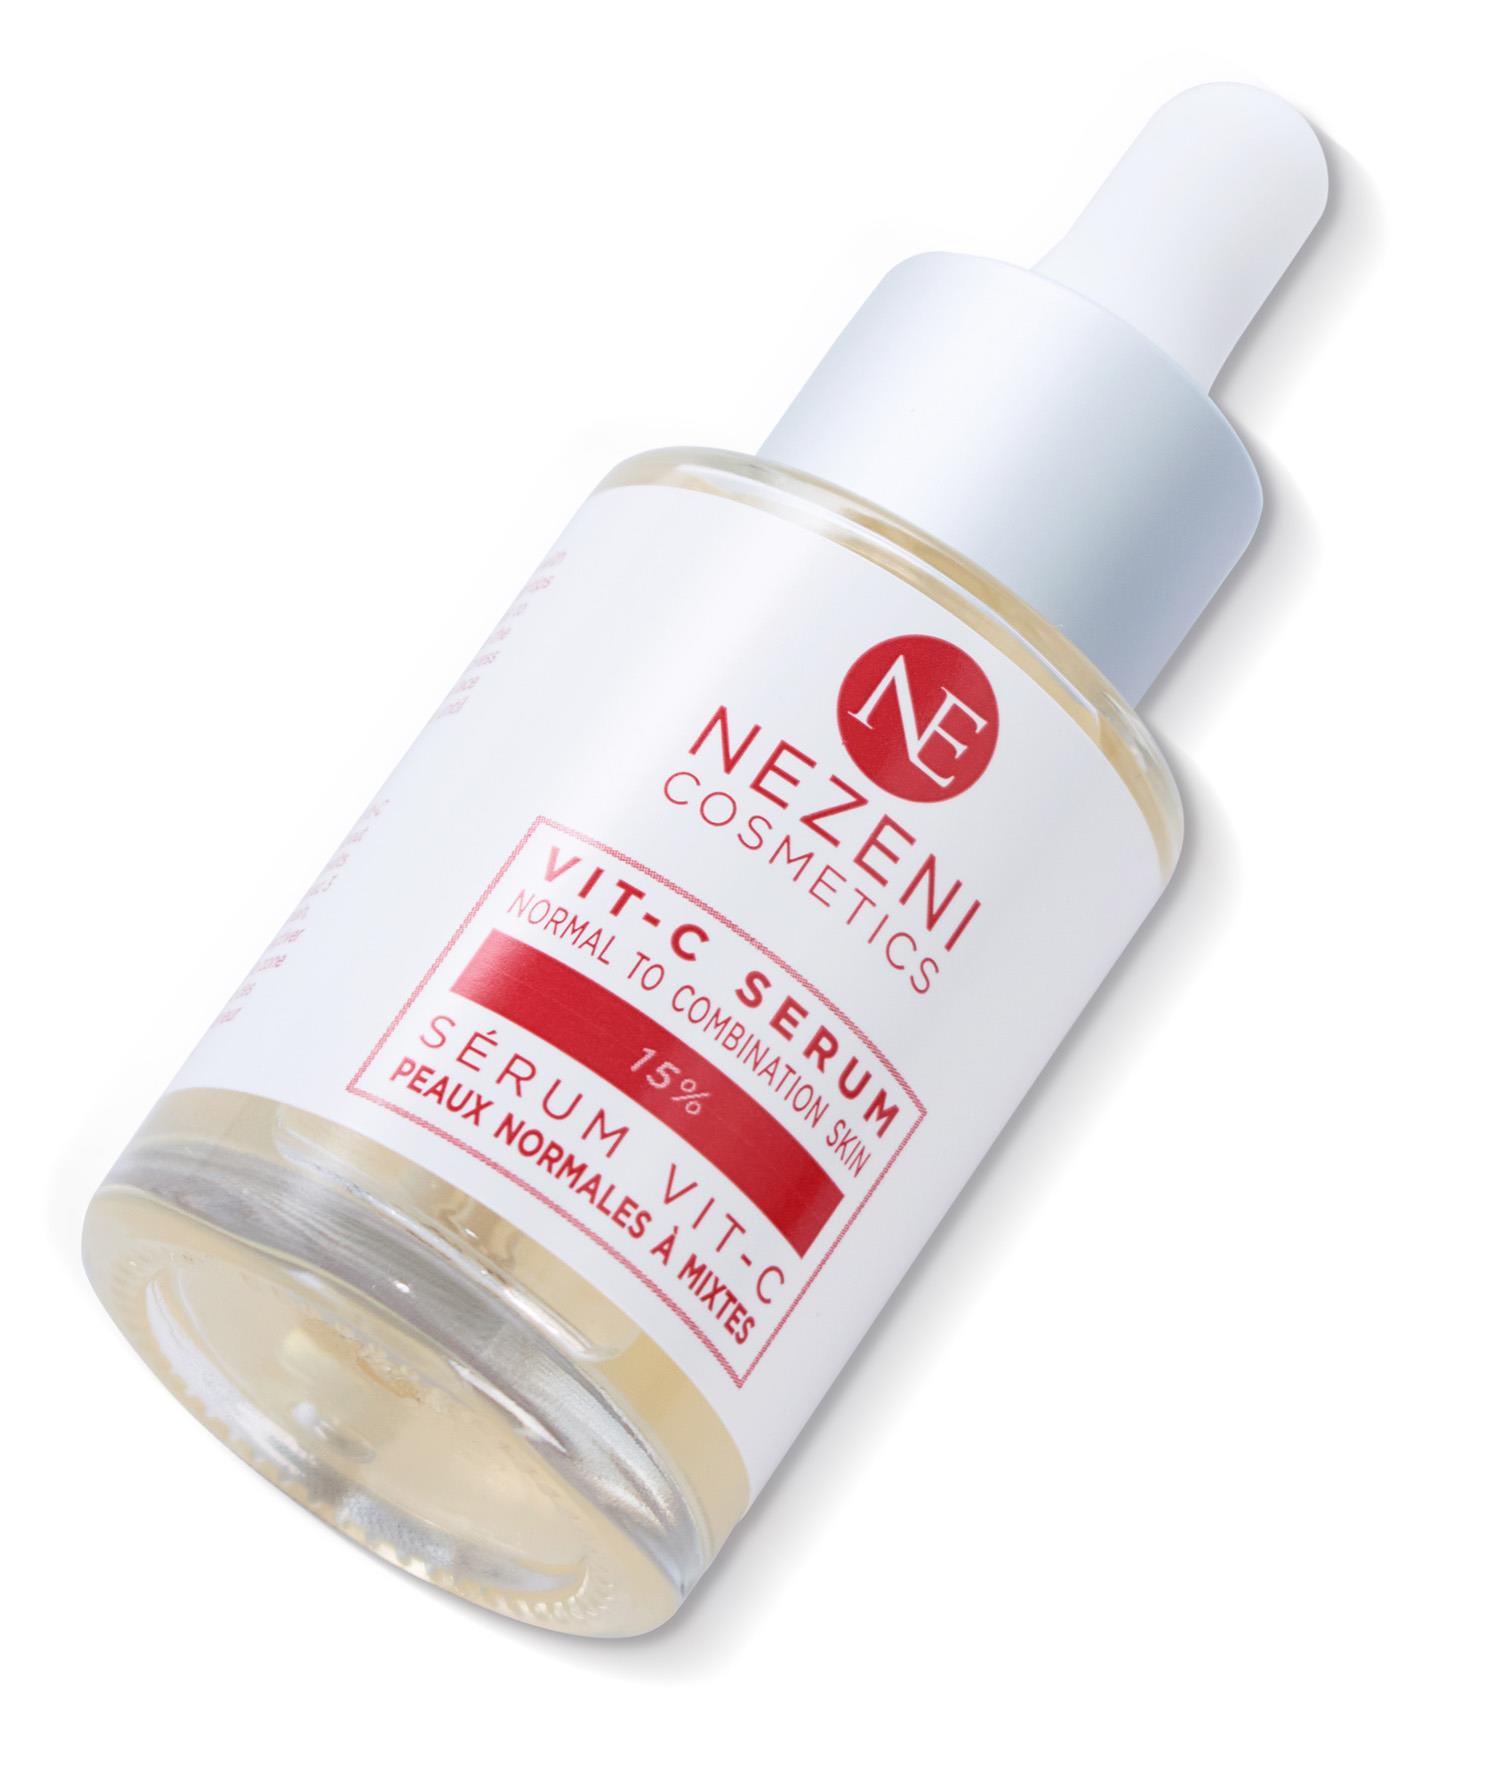 serum-vitC-nezeni-cosmetics. Serum Vitamina C de Nezeni Cosmetics